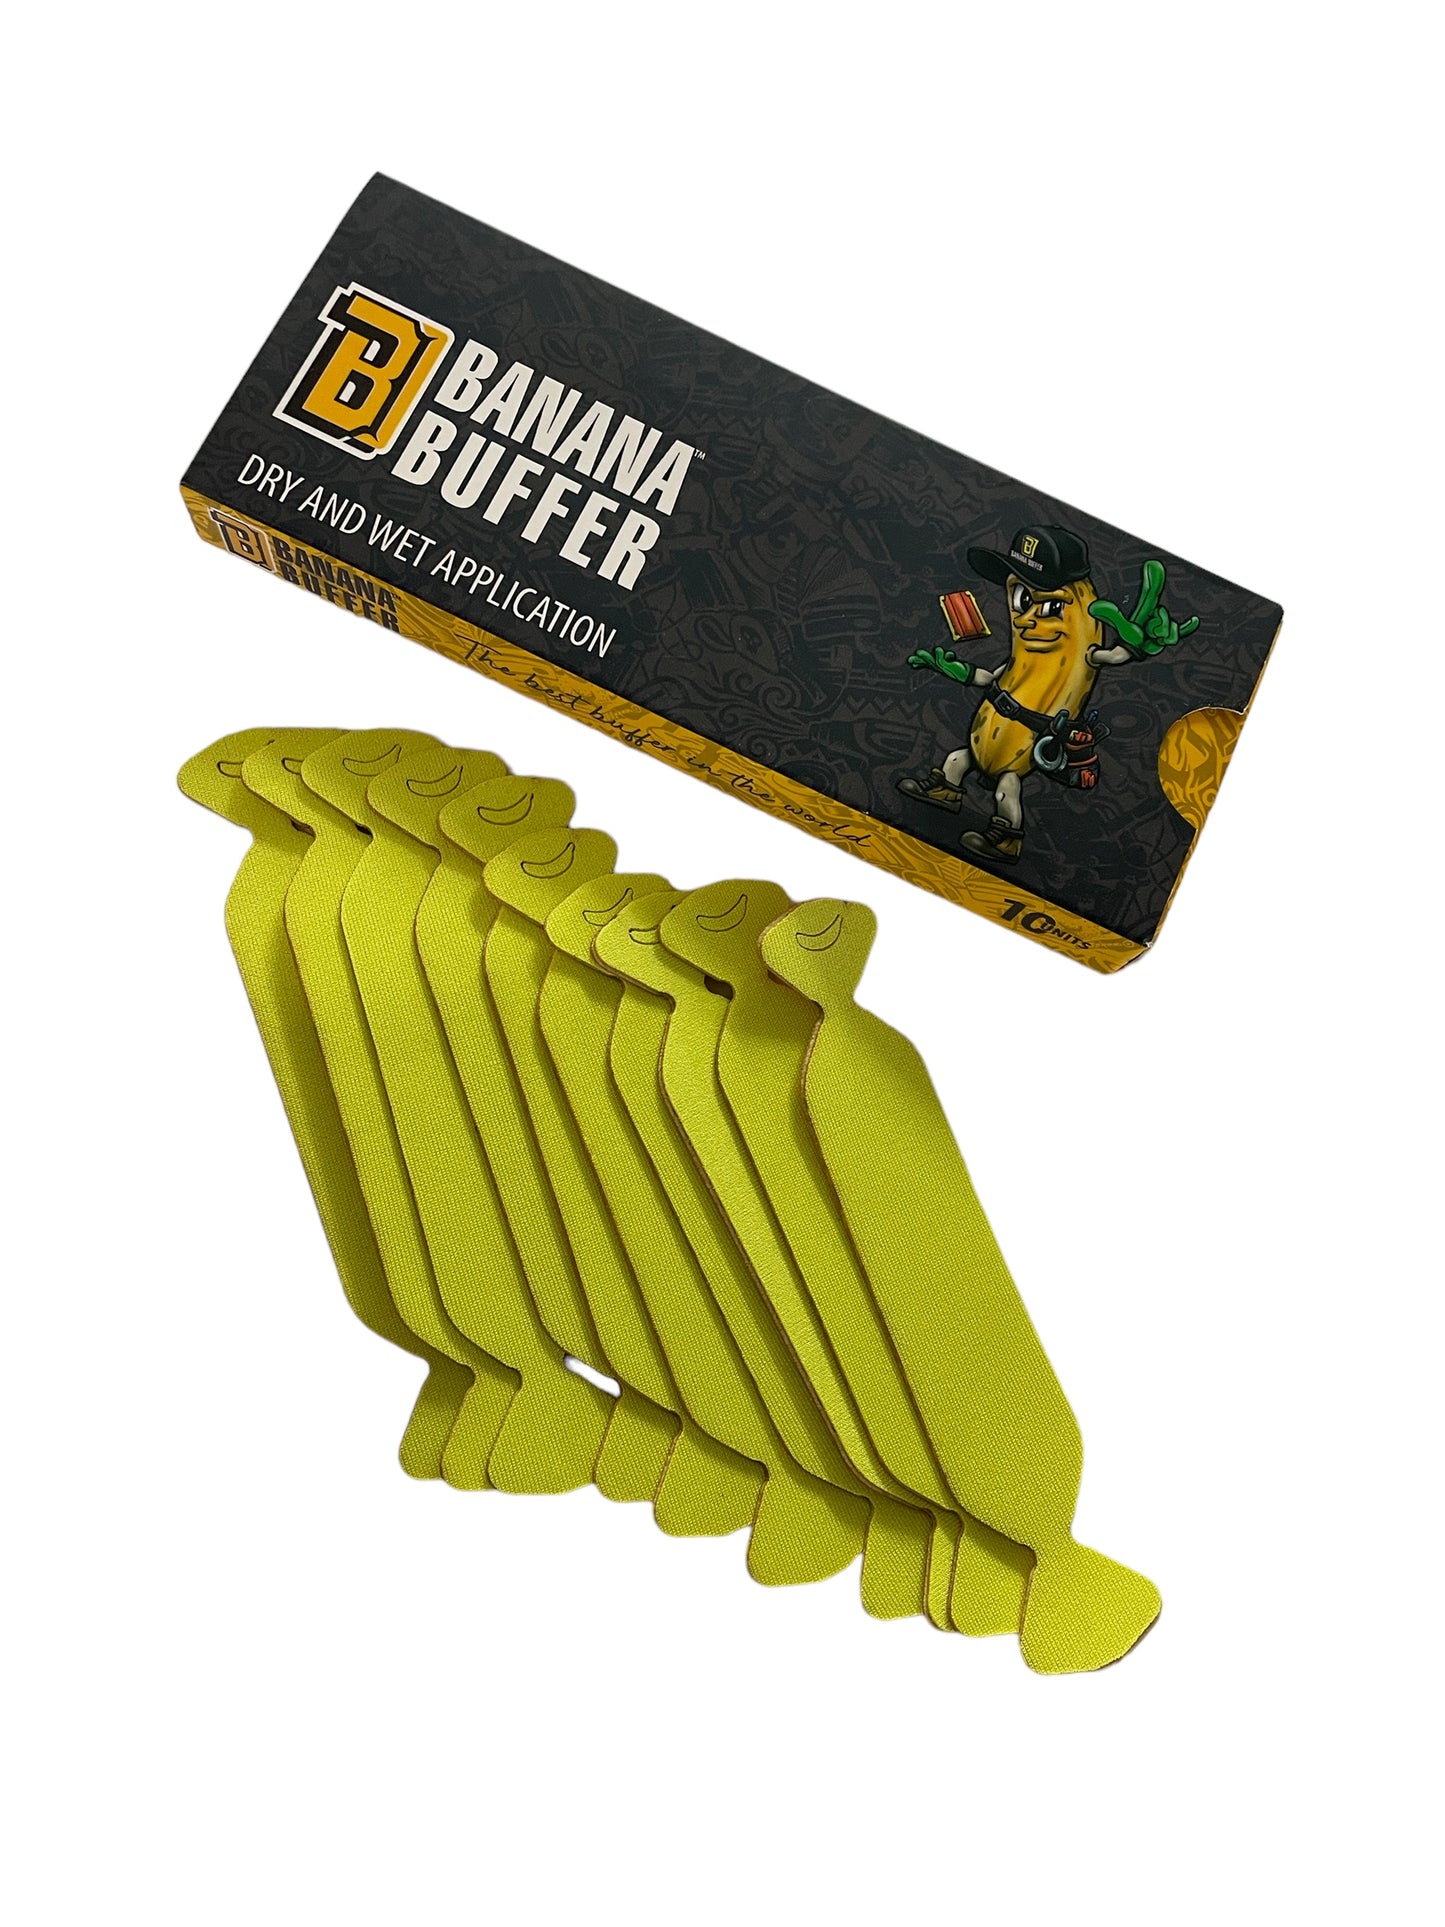 Banana Buffers pack of 10